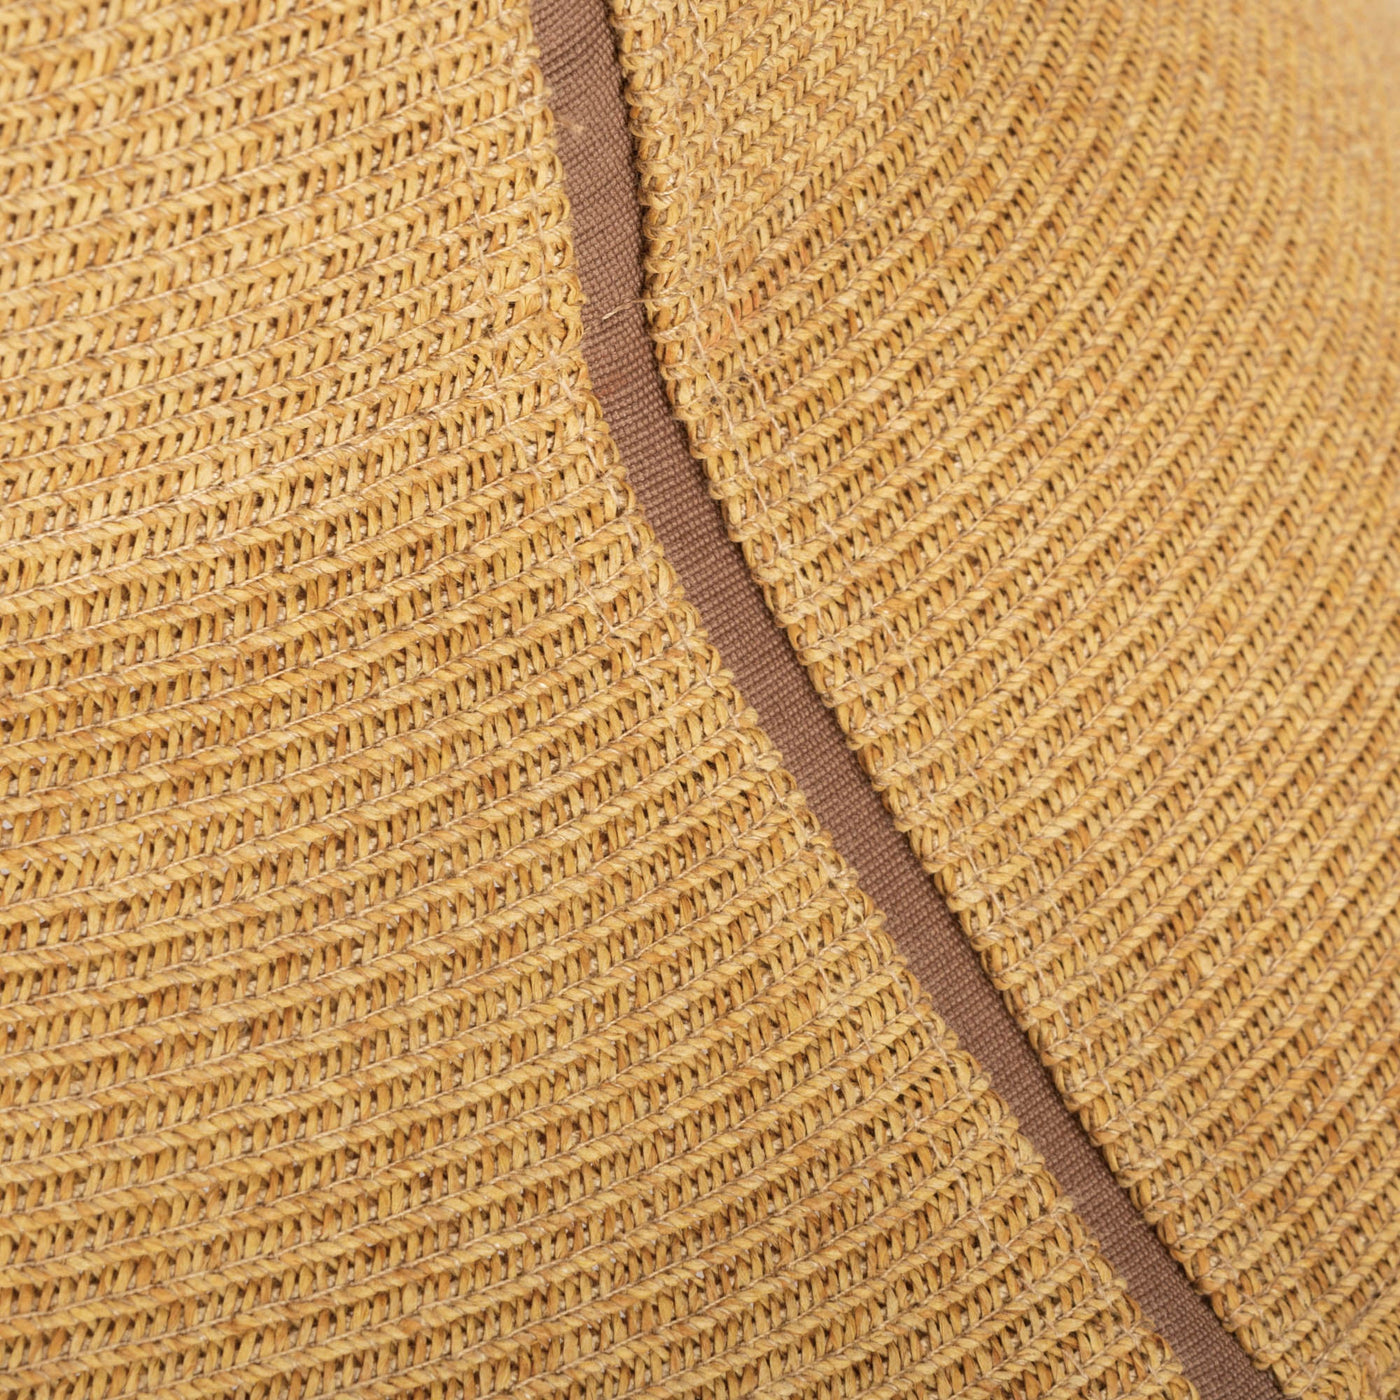 Oceanside - Women's Ultrabraid Bucket with Side Seam-BUCKET-San Diego Hat Company